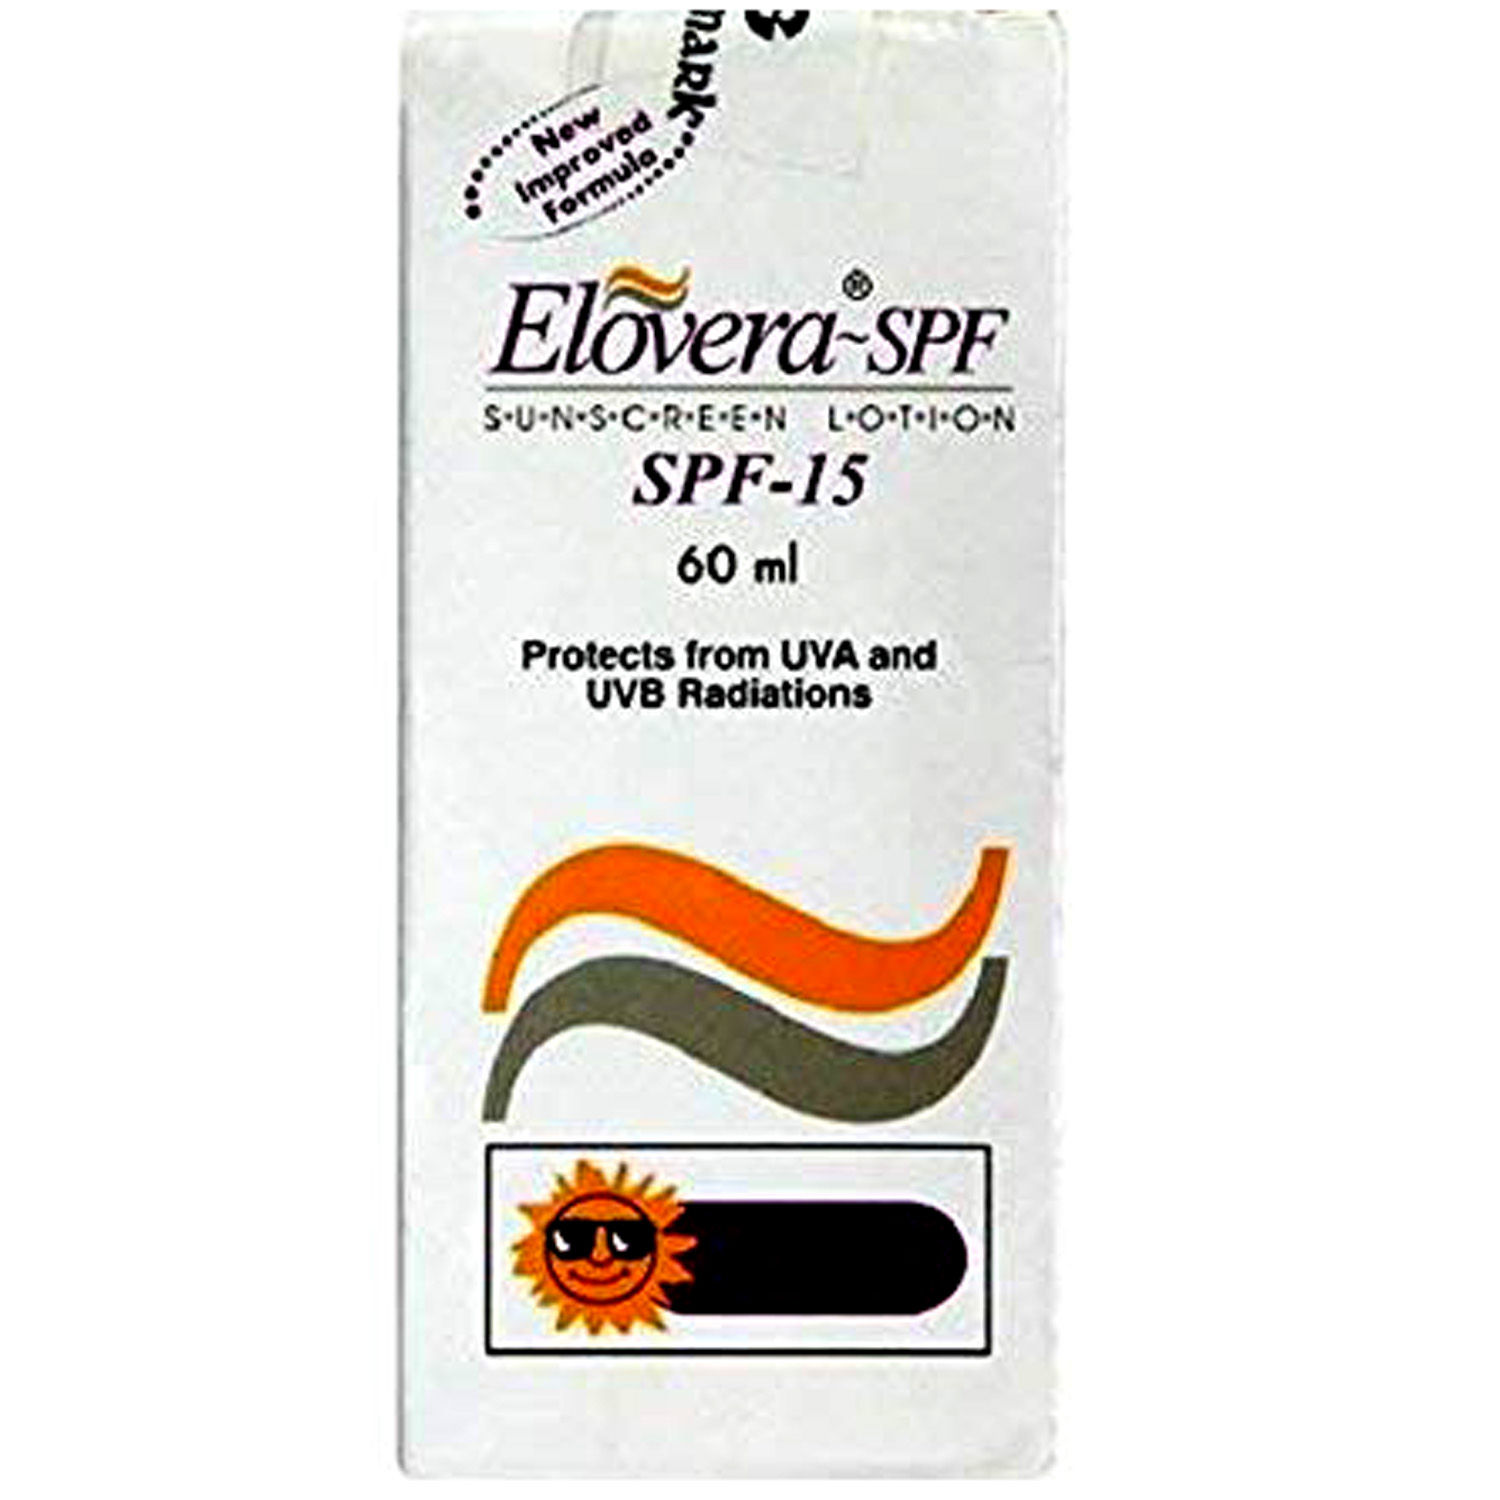 Elovera-SPF Sunscreen Lotion SPF 15, 60 ml, Pack of 1 